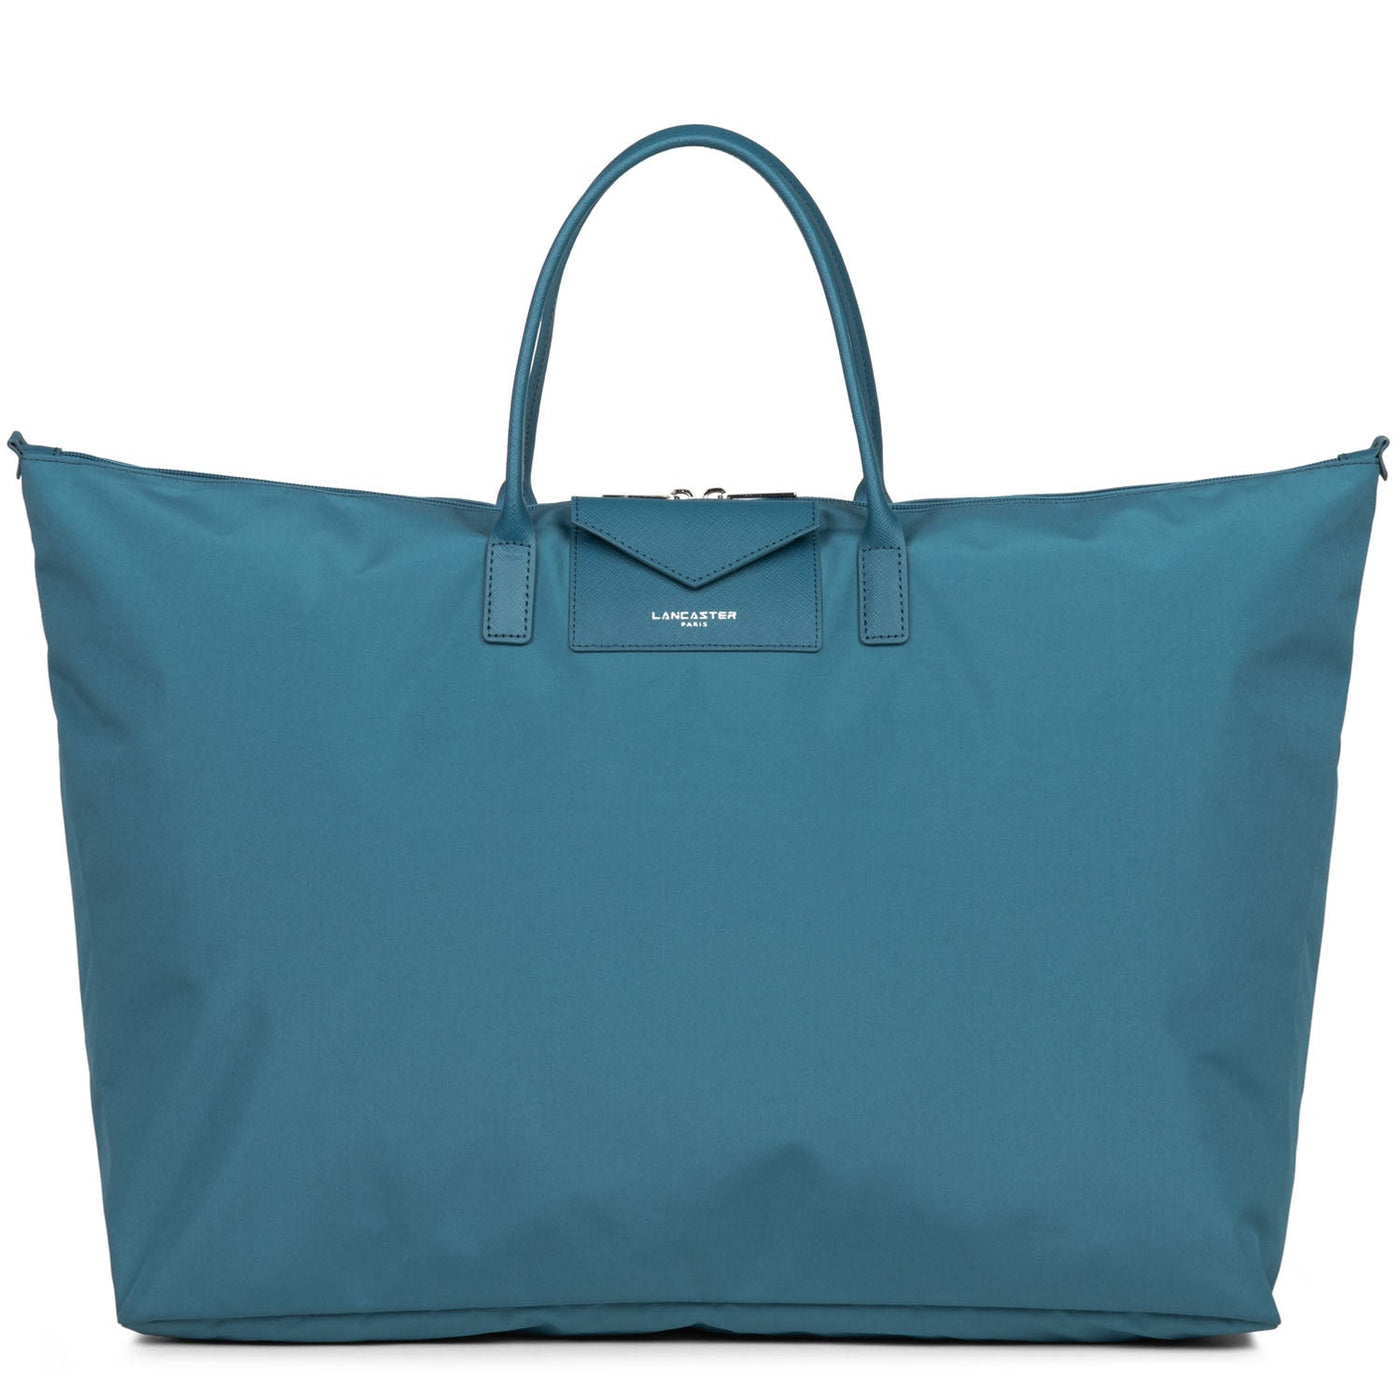 weekender bag - smart kba #couleur_bleu-paon